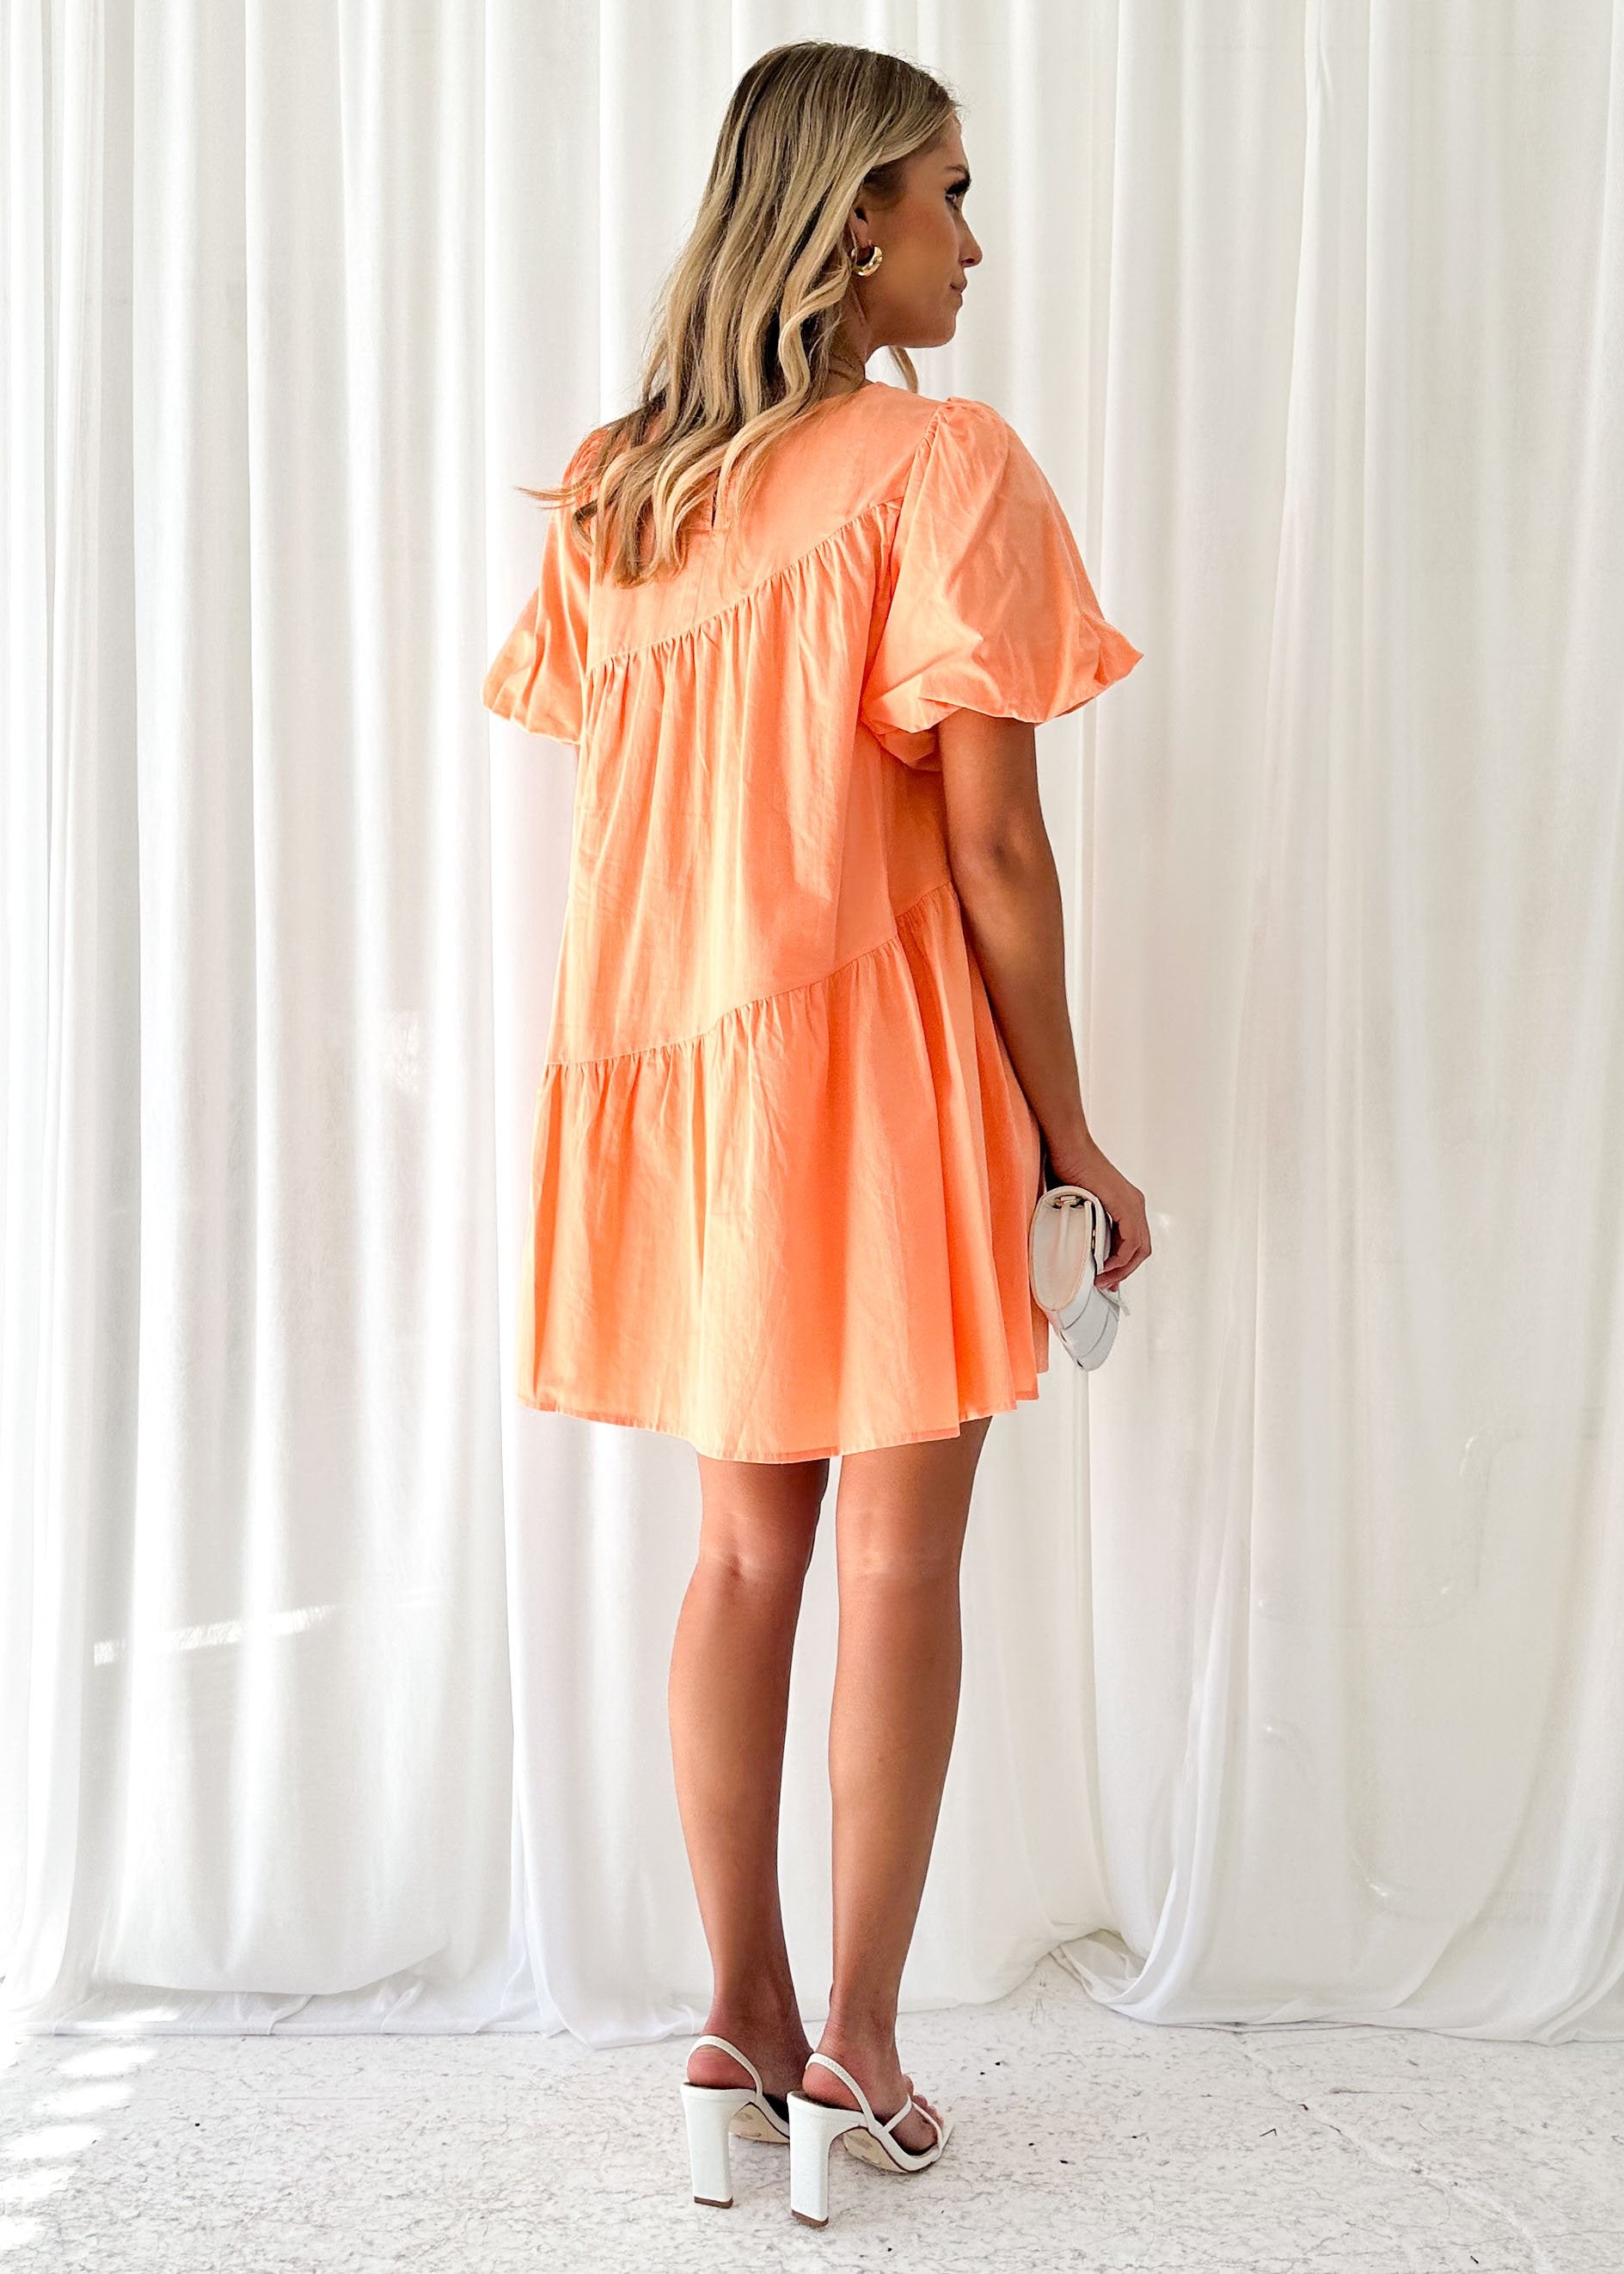 Oliviette Dress - Peach